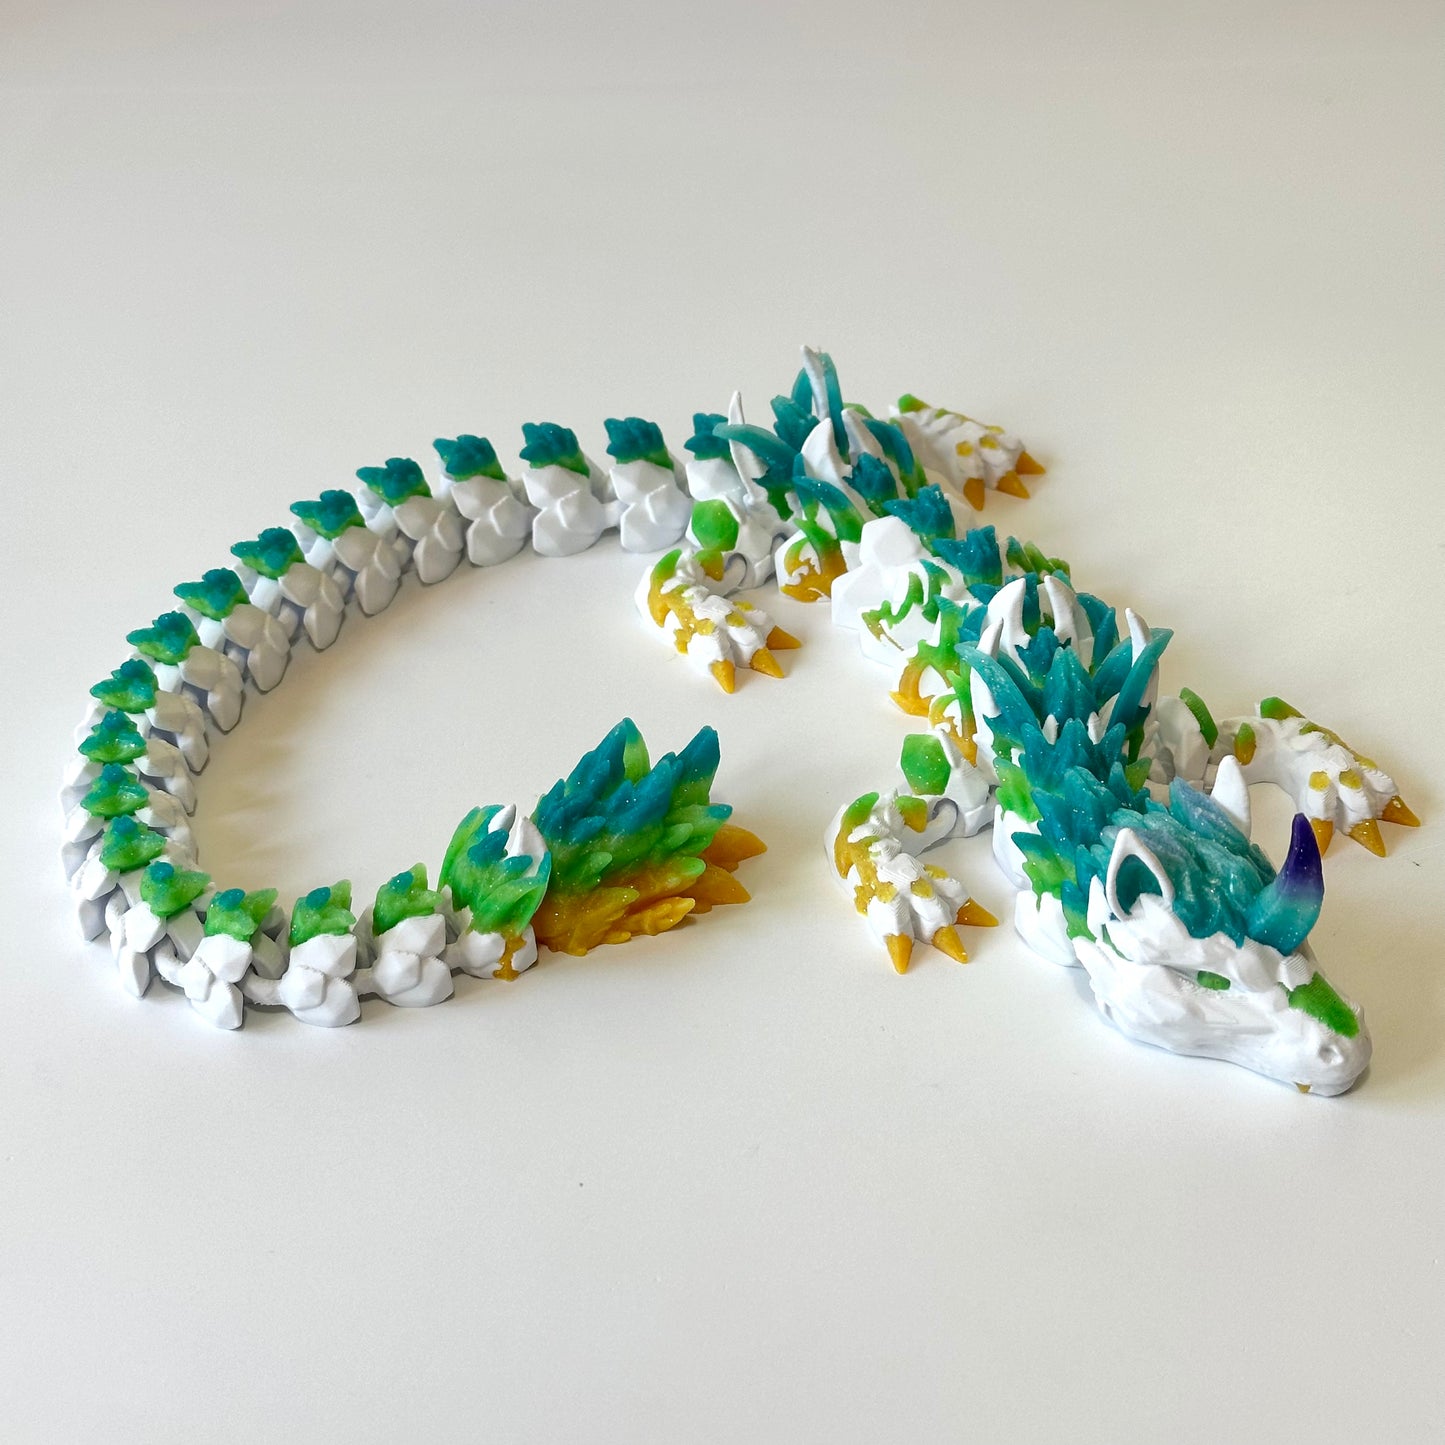 Unicorn Dragon - 3D Printed Articulating Figurine